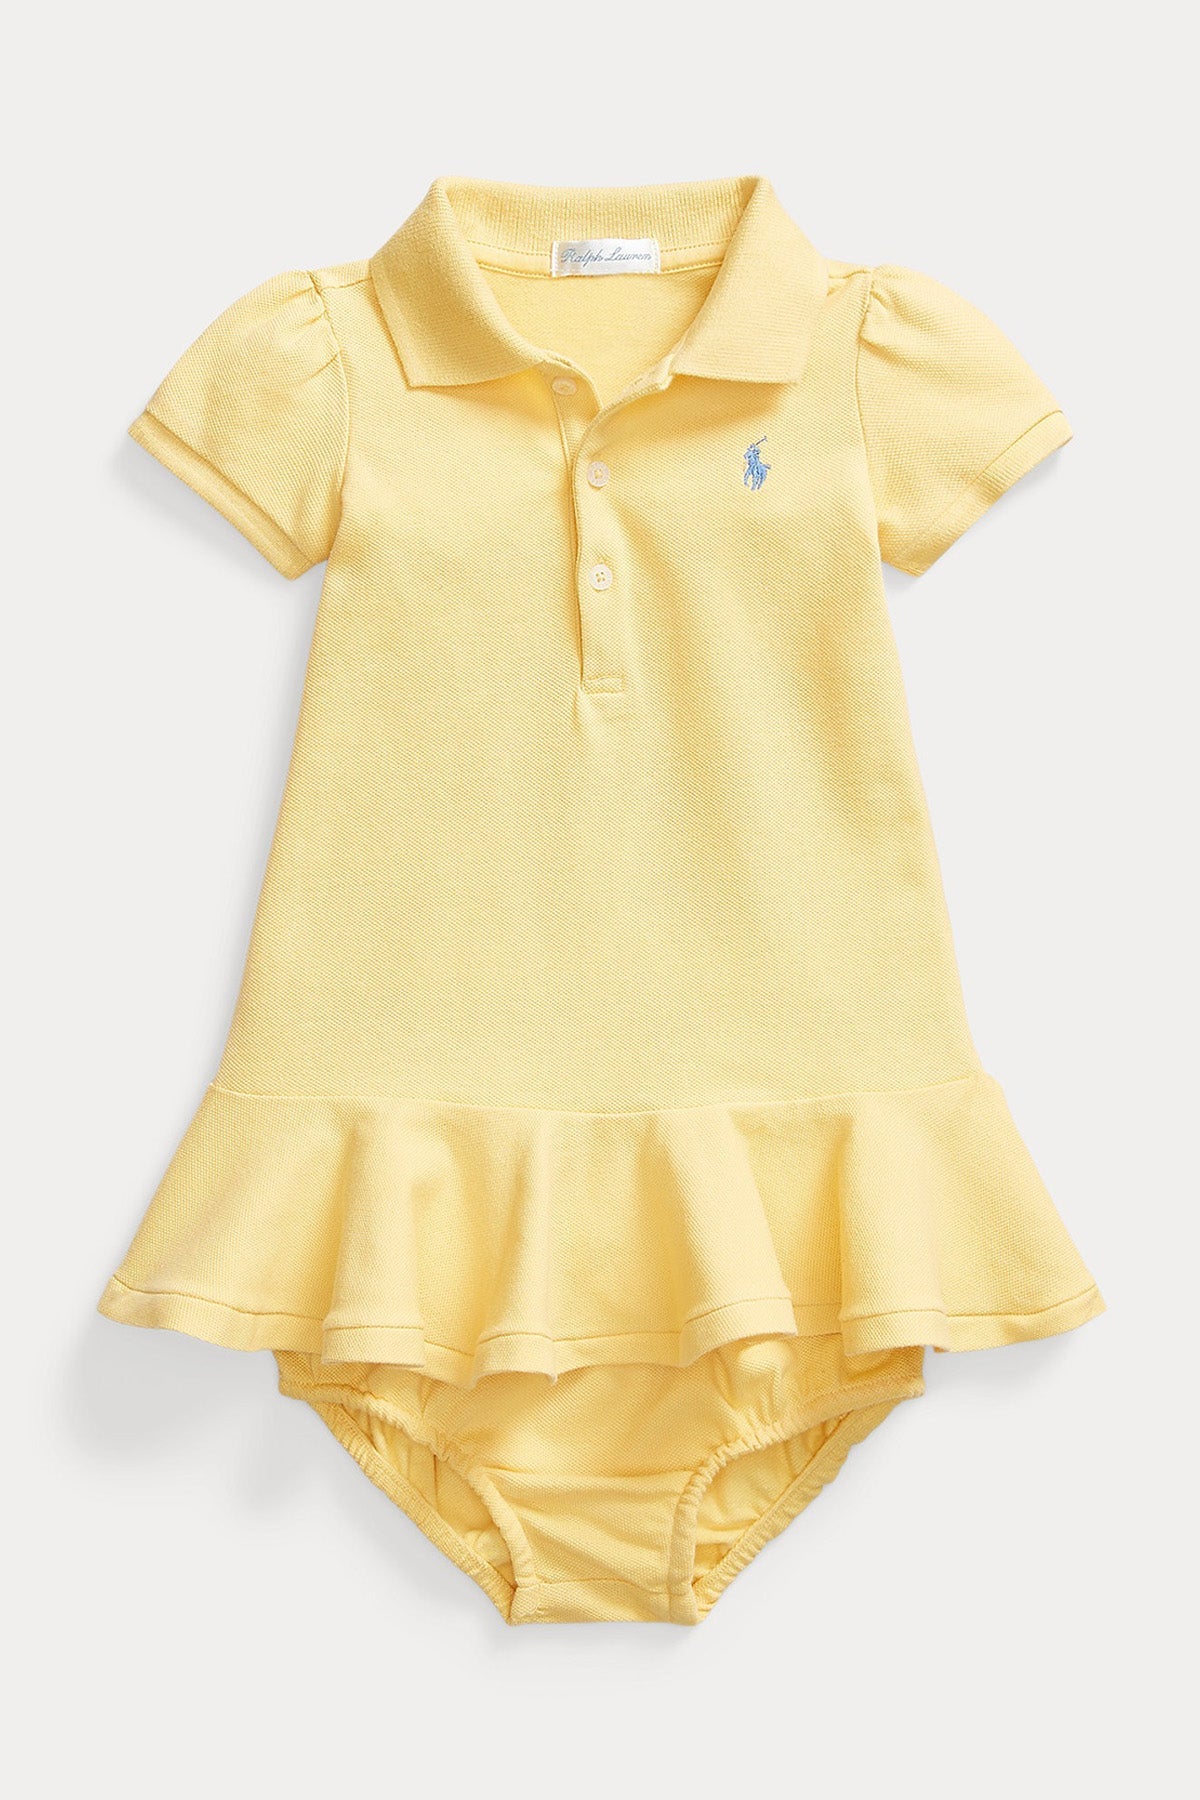 Polo Ralph Lauren Kids 12-18 Aylık Kız Bebek Elbise